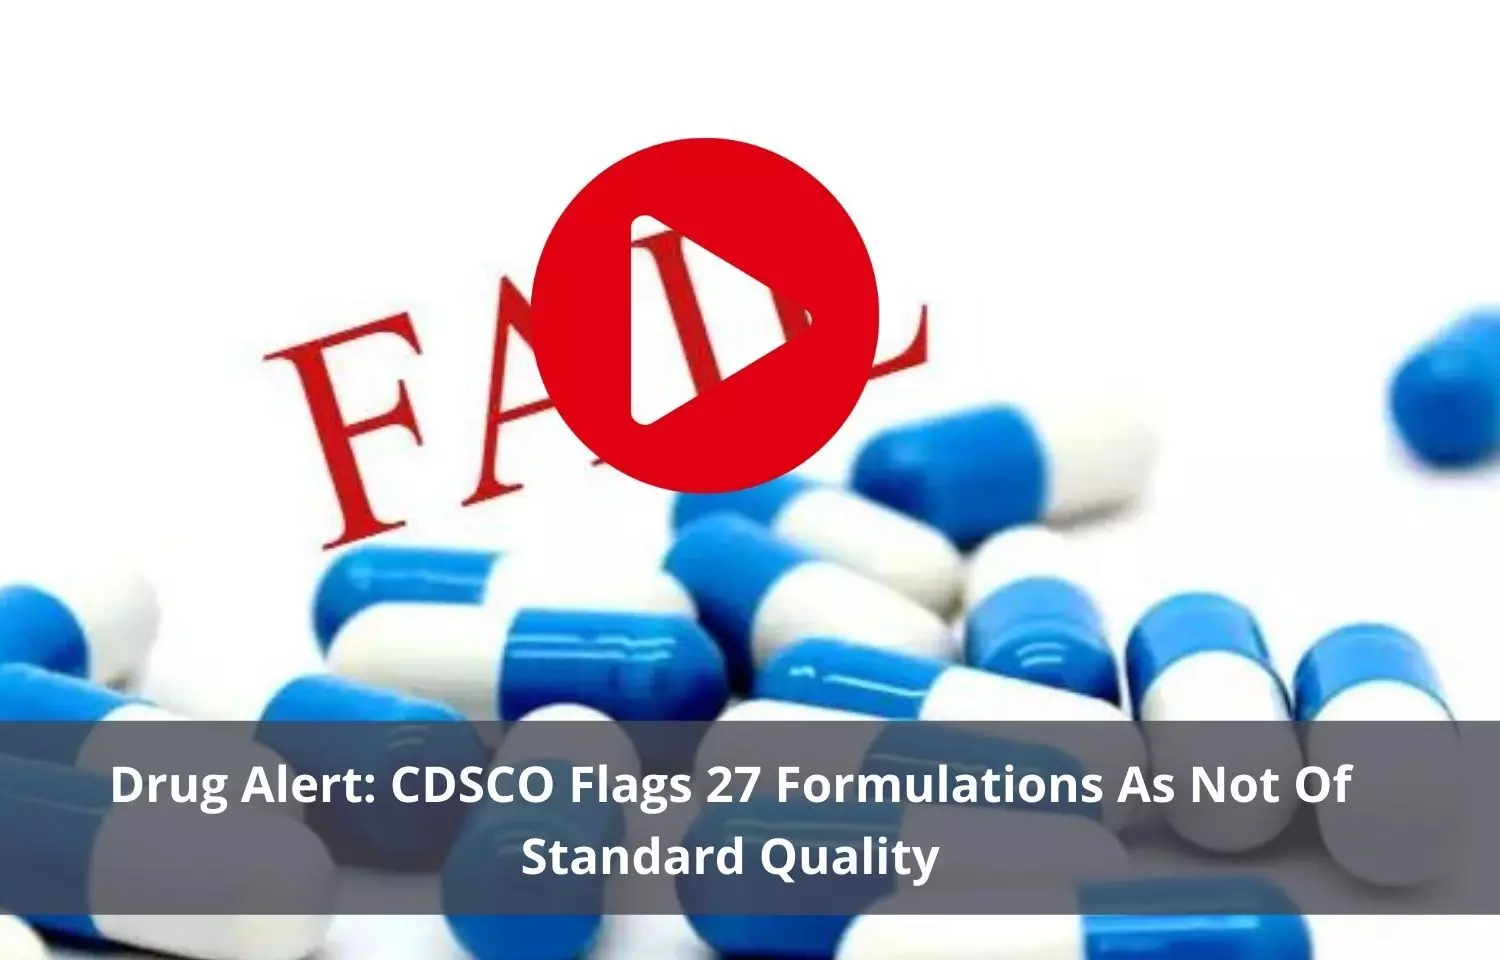 CDSCO flags 27 formulations as not of standard quality